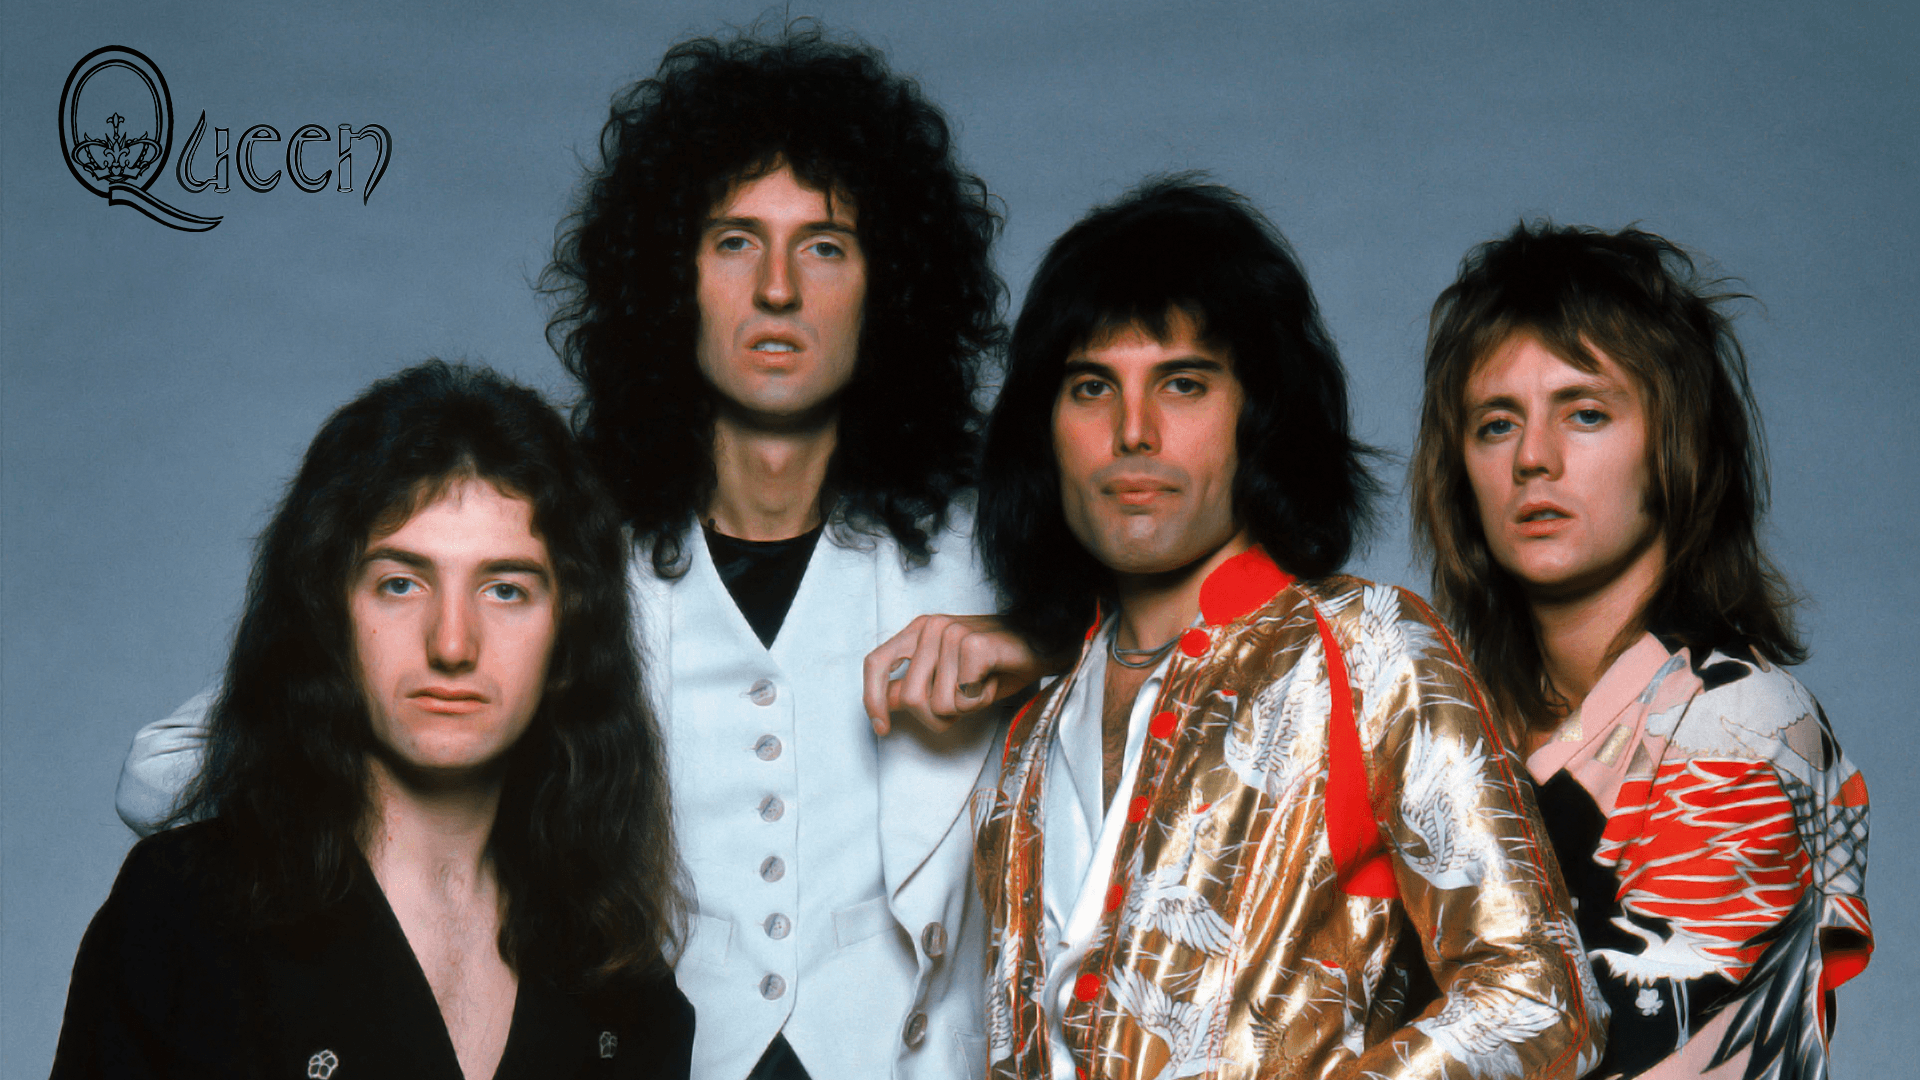 Queen Wallpaper Band. Queen Band full HD. Queen. Queen rock band